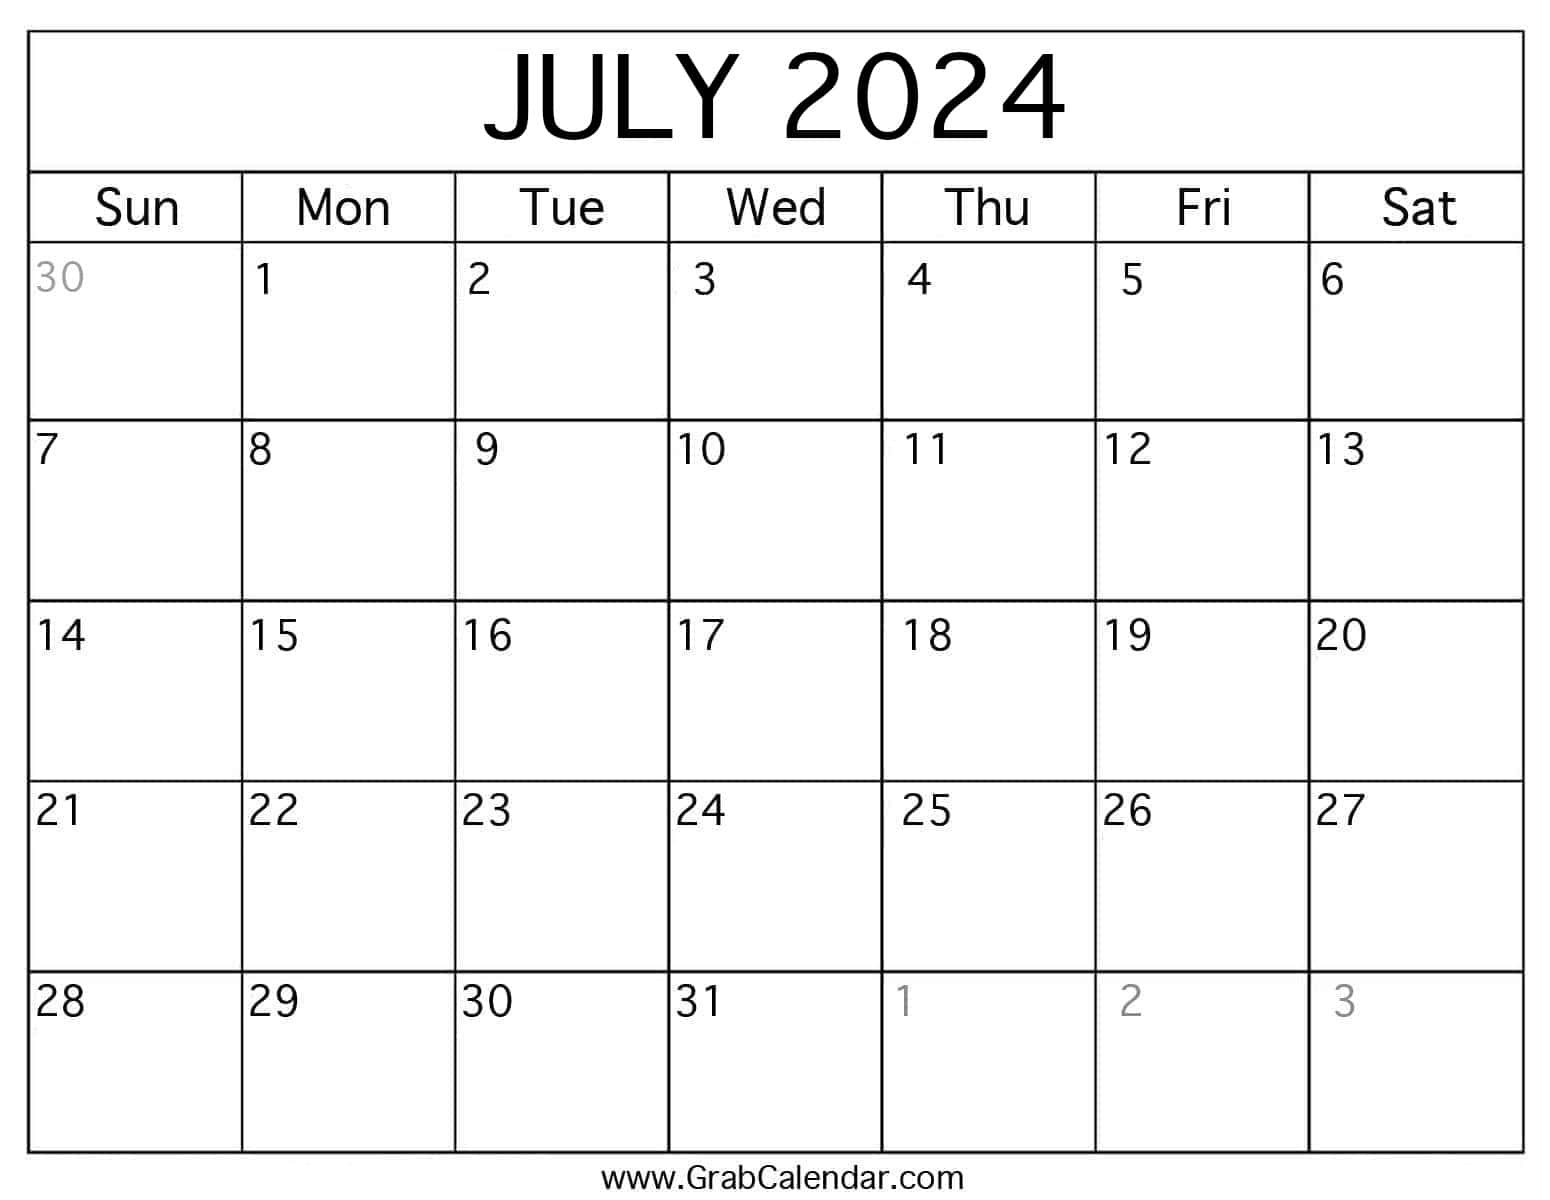 Printable July 2024 Calendar throughout July 2024 Calendar Image